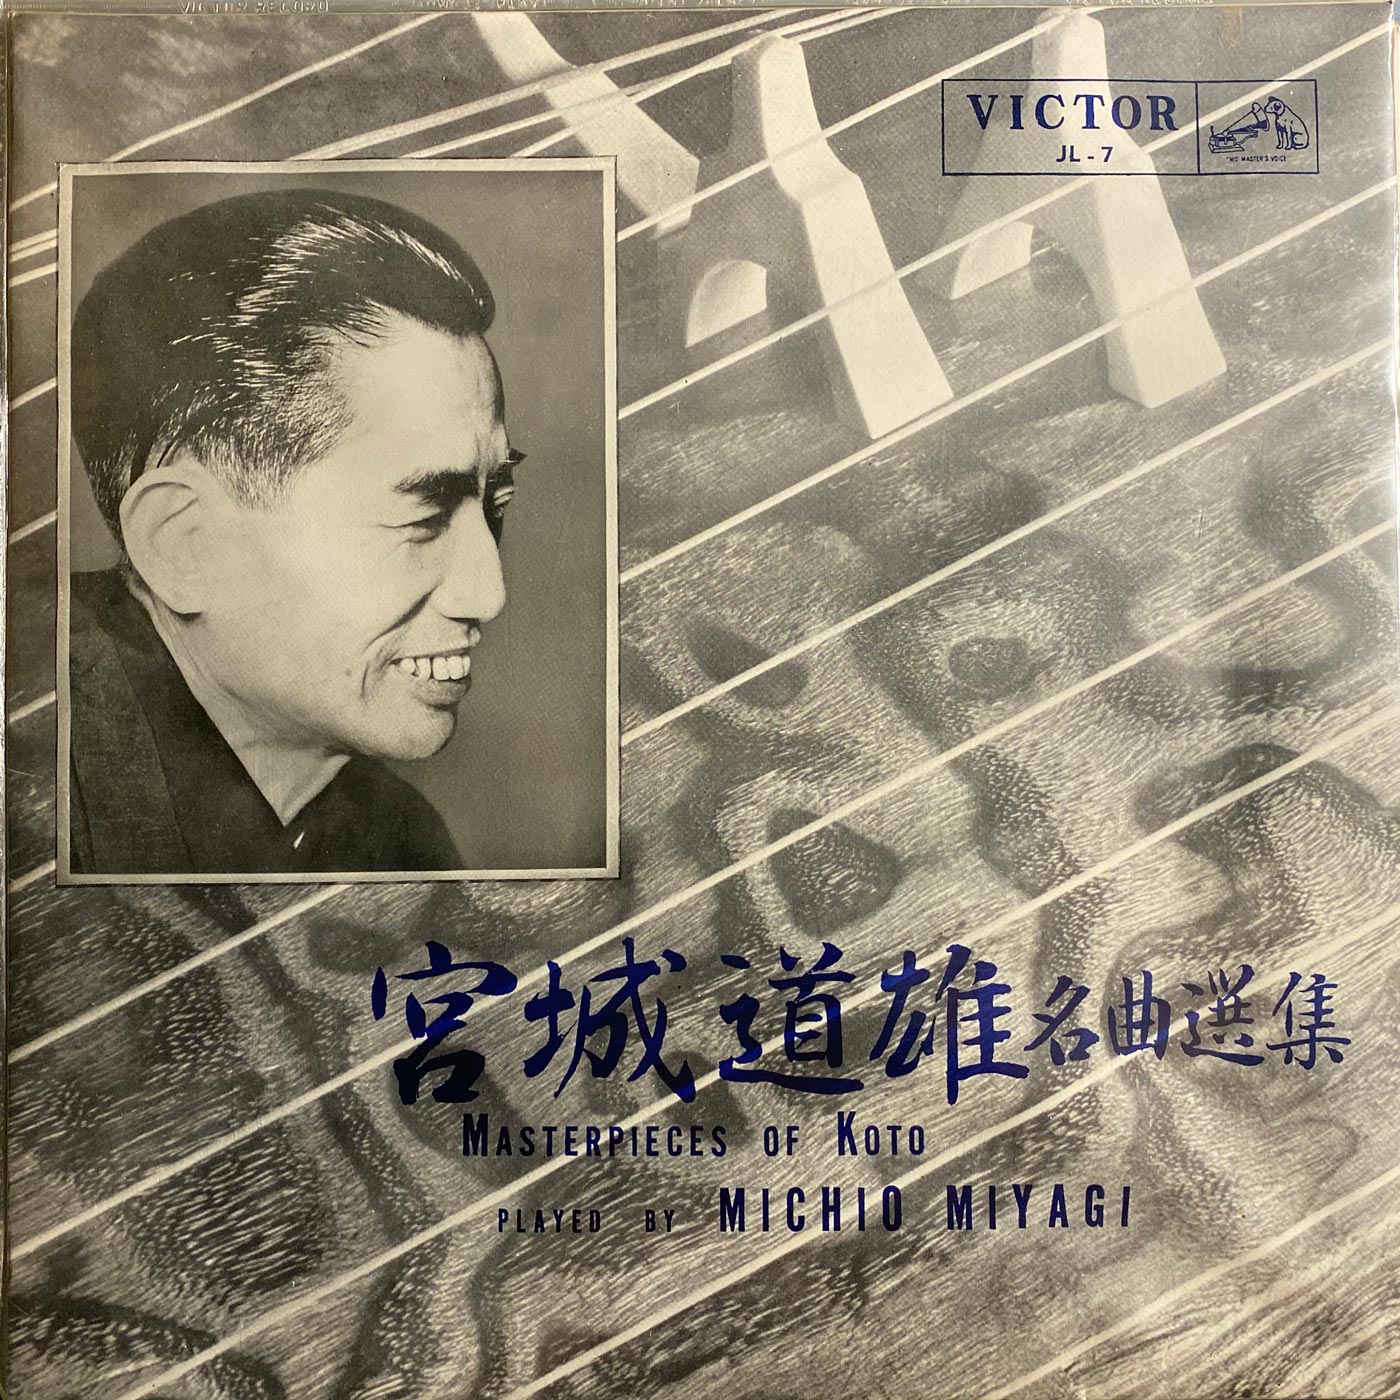 Michio Miyagi - Masterpieces of Koto